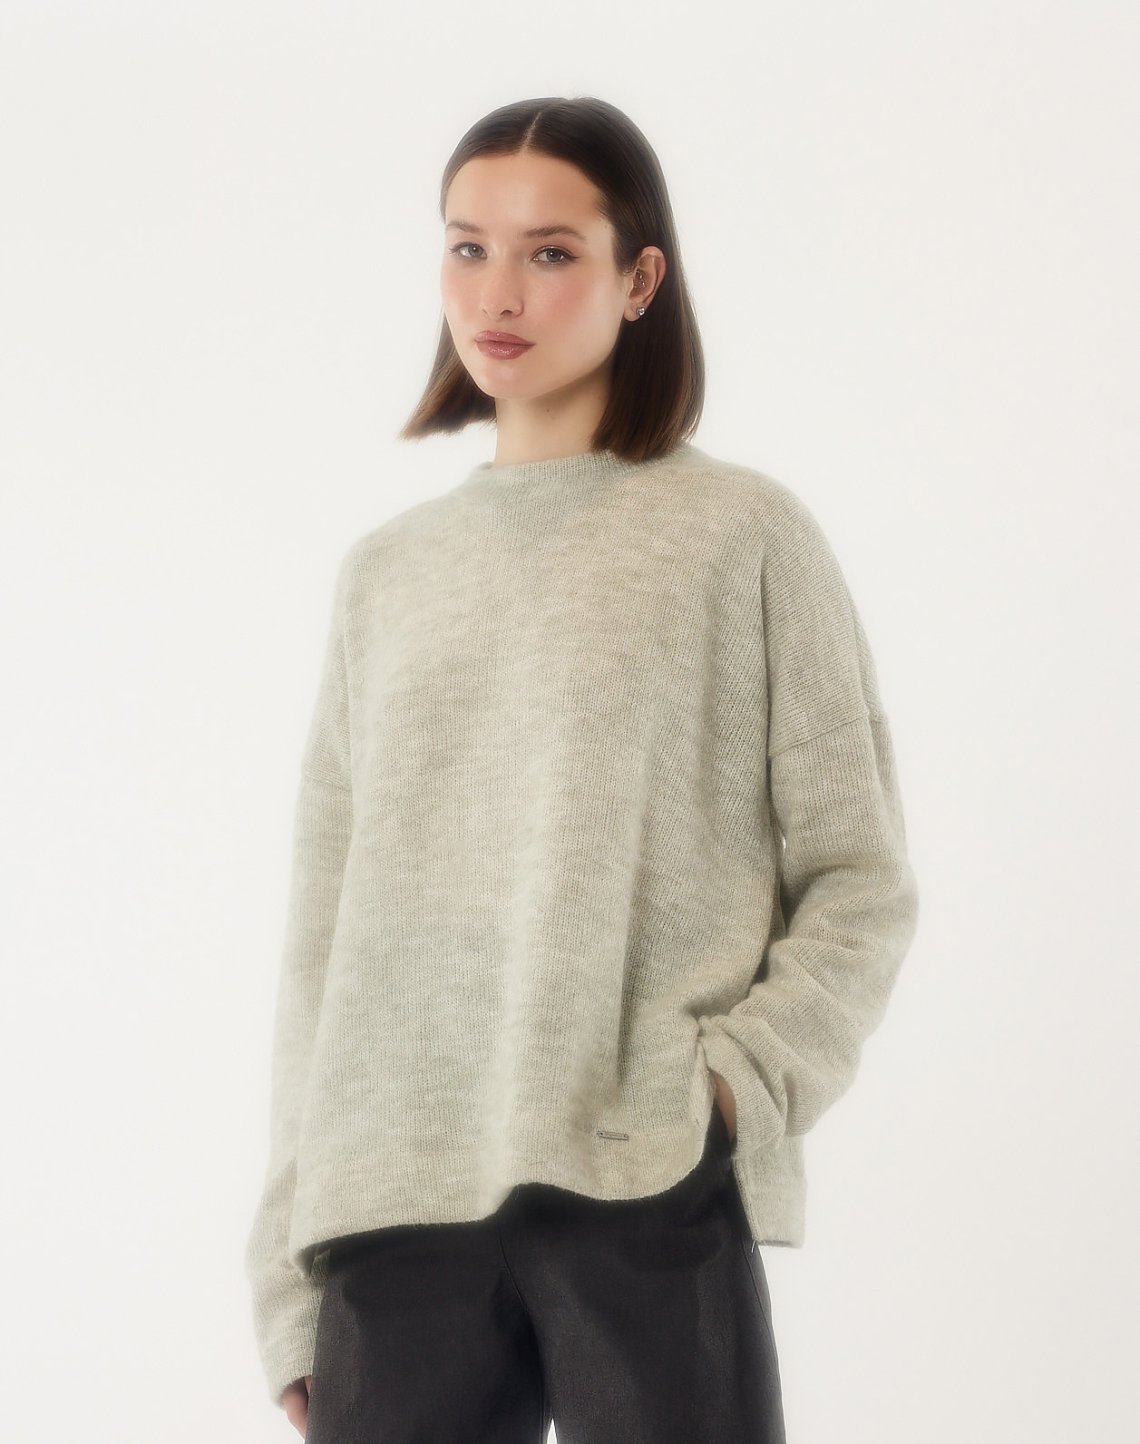 Overised knit blouse